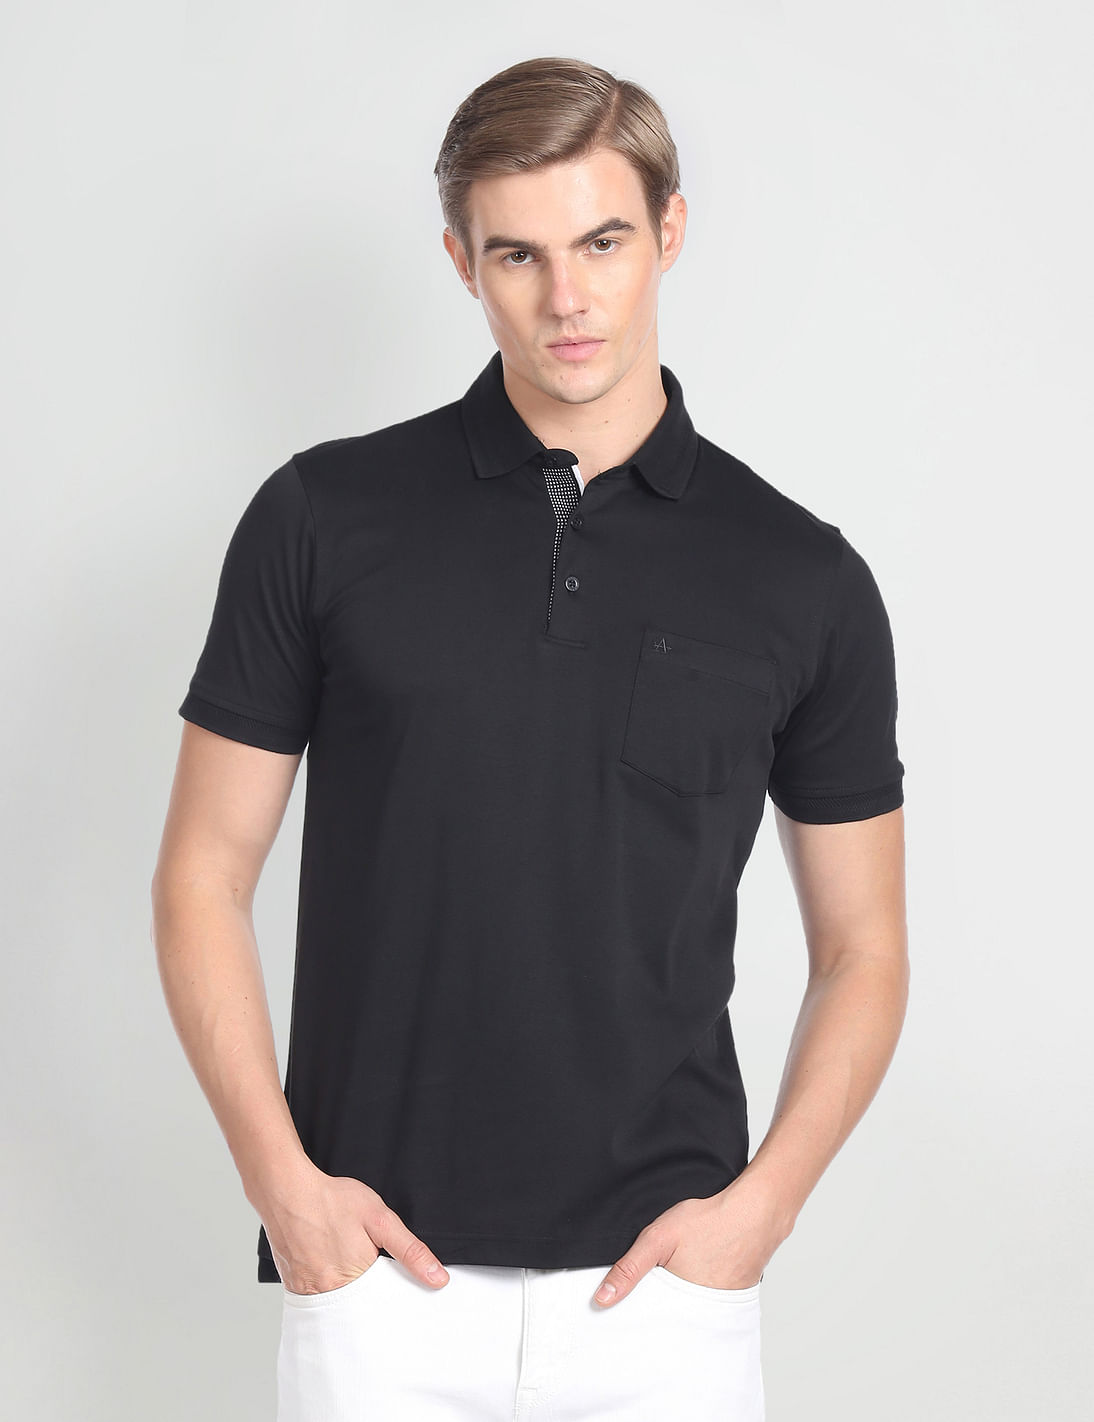 Buy Arrow Solid Cotton Polo Shirt - NNNOW.com